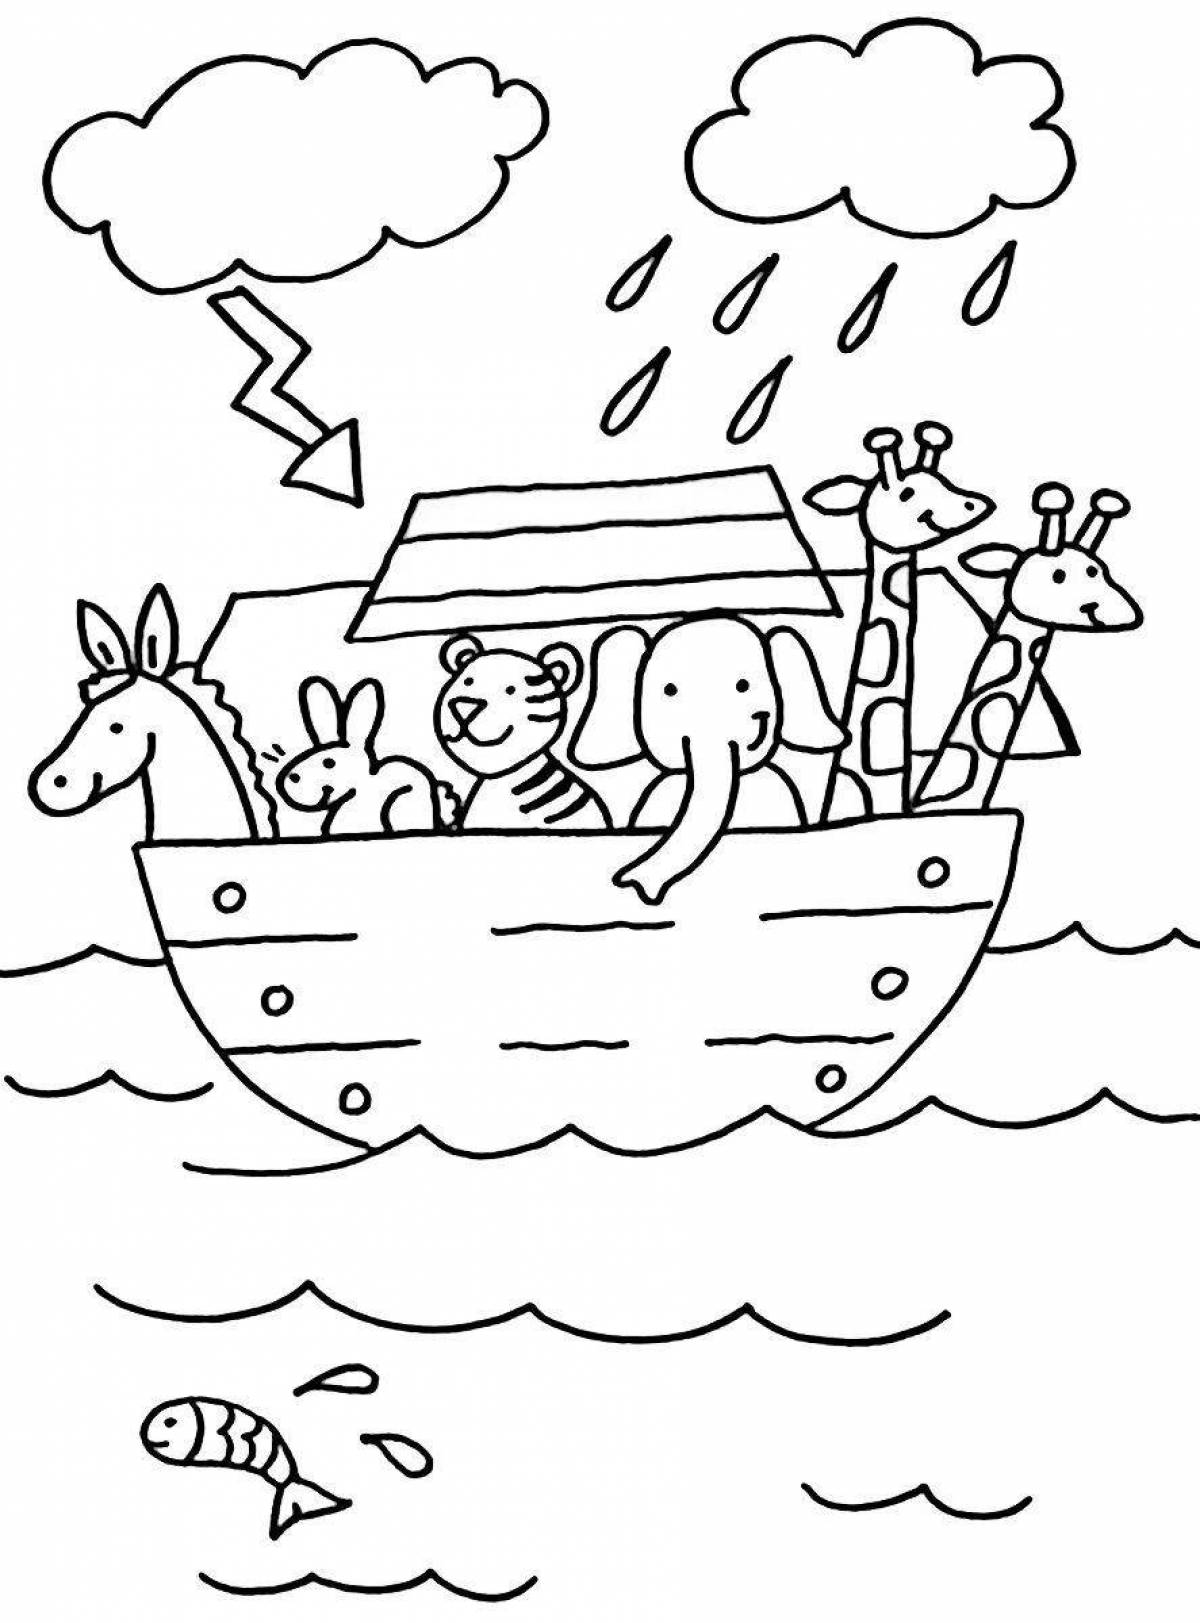 Glorious Noah's Ark coloring book for kids